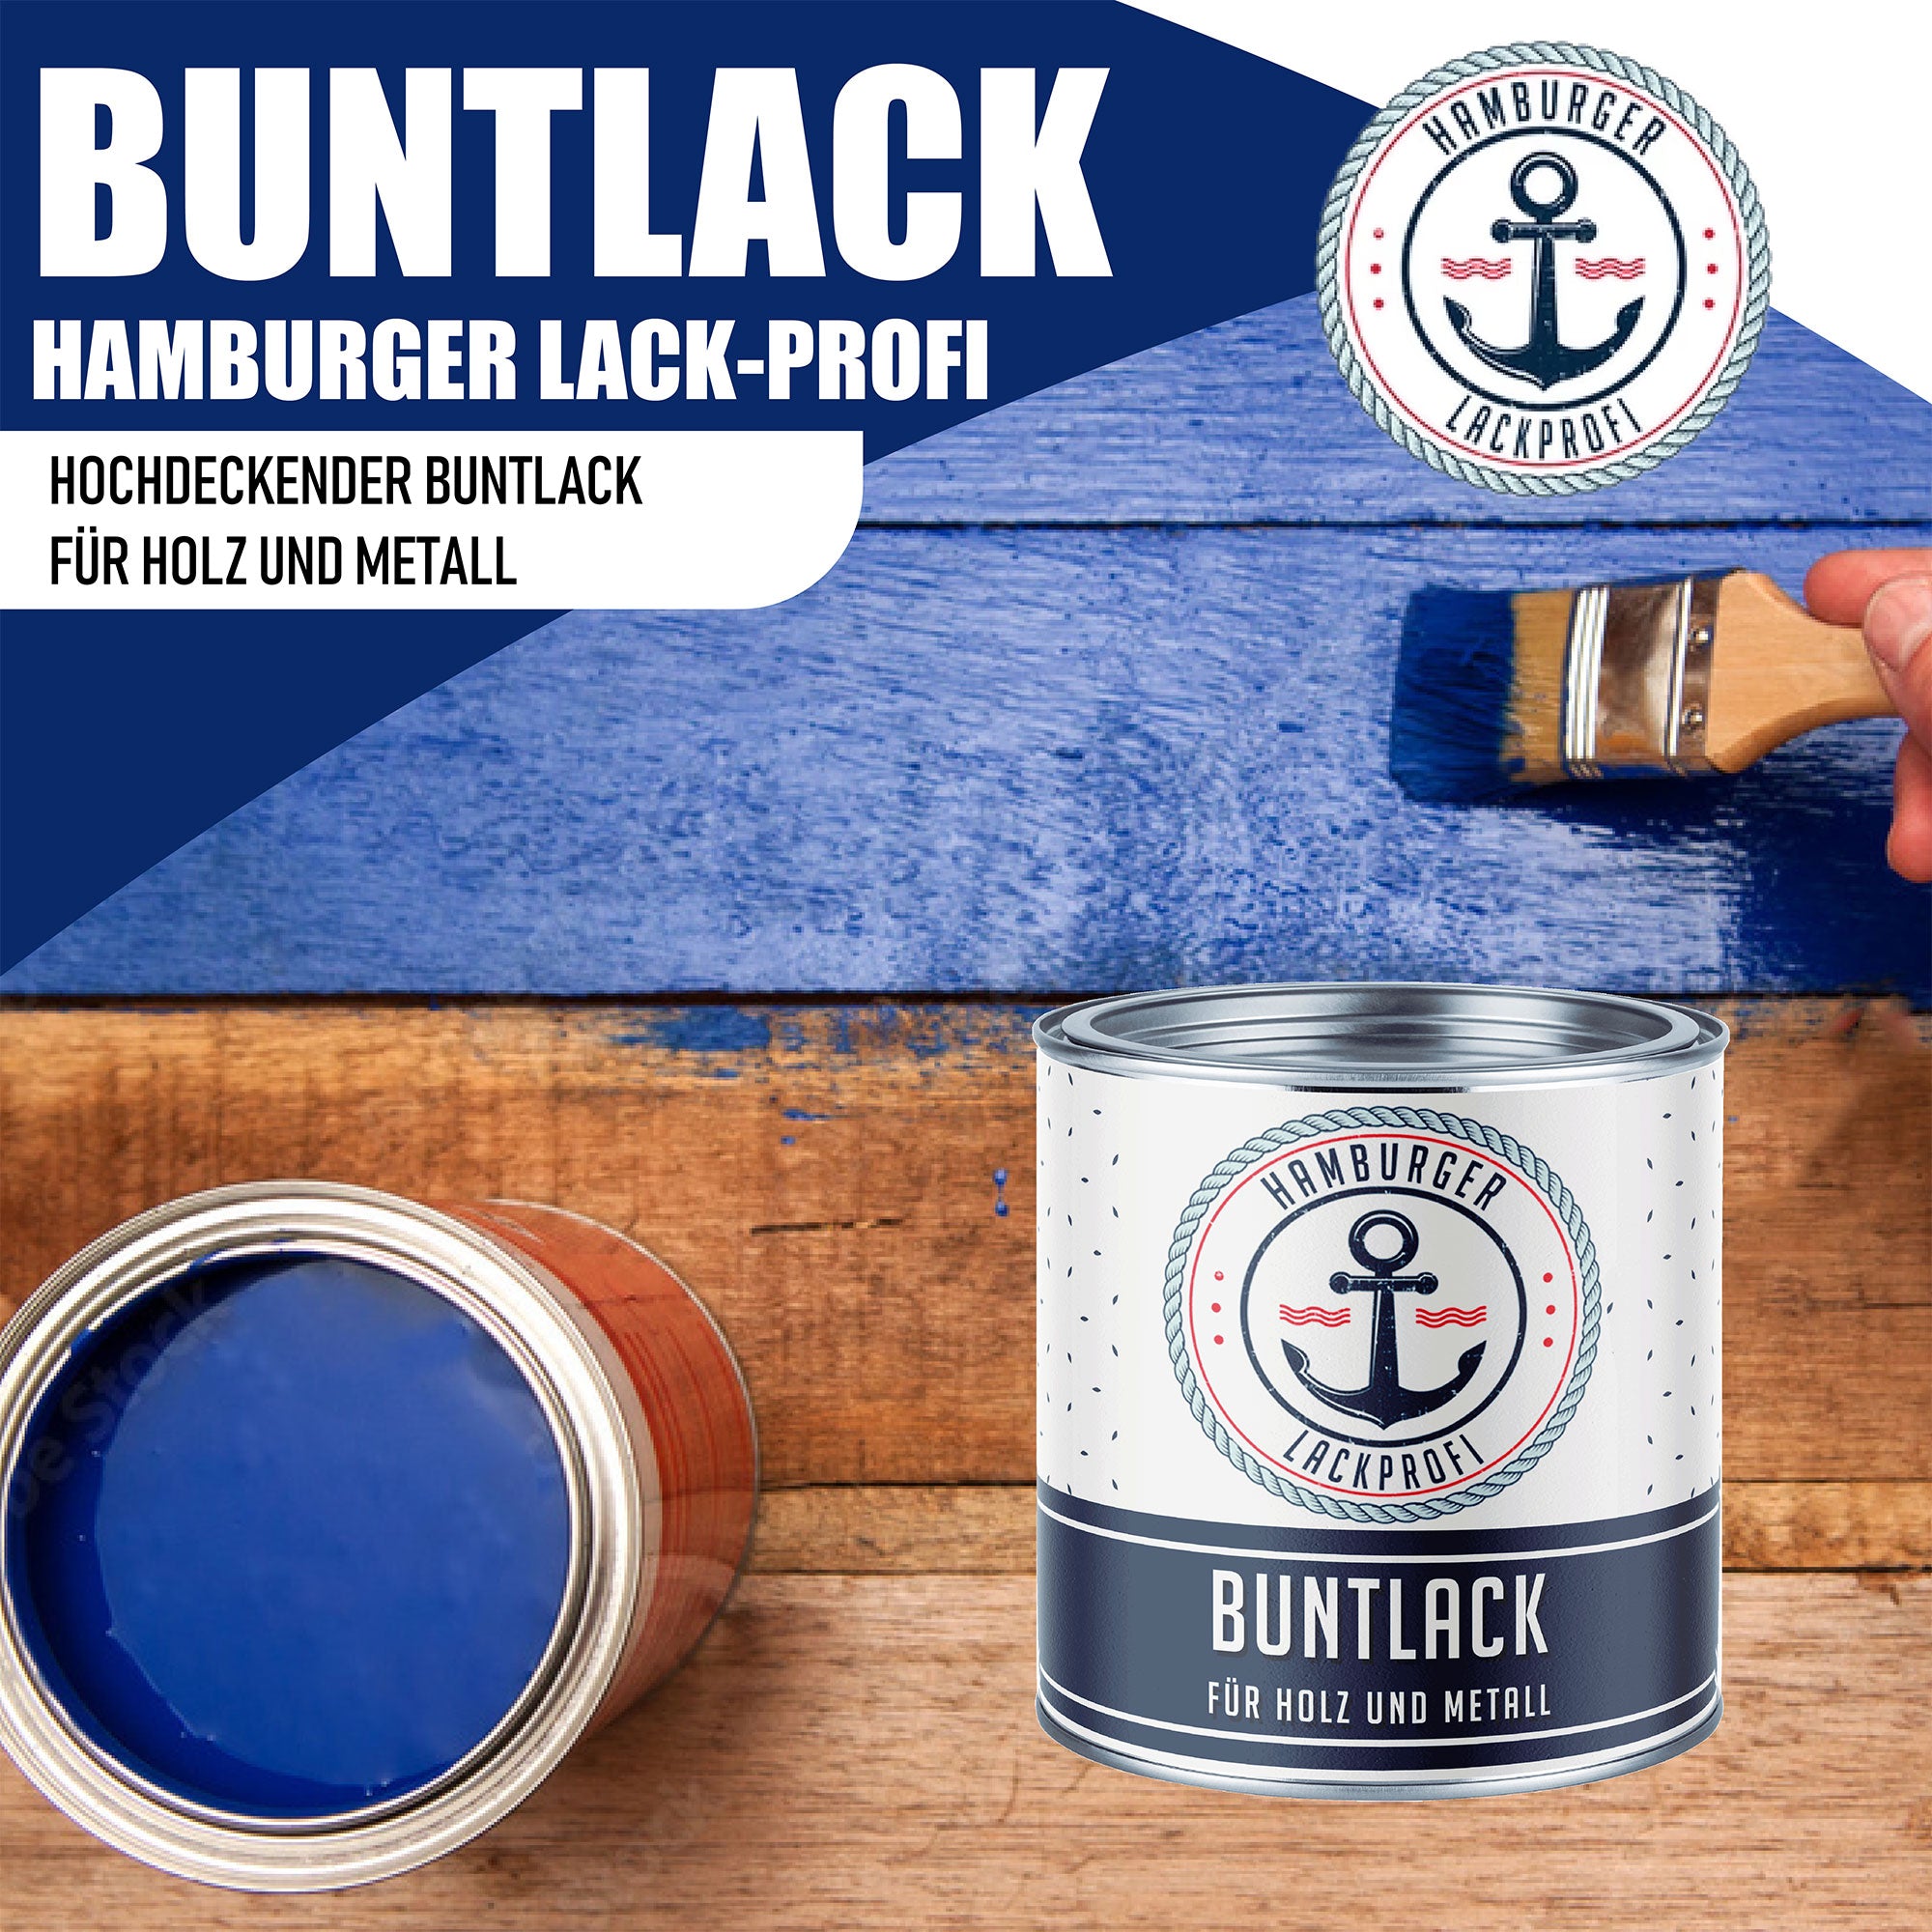 Hamburger Lack-Profi Buntlack Türkisgrün RAL 6016 - Robuster Kunstharzlack